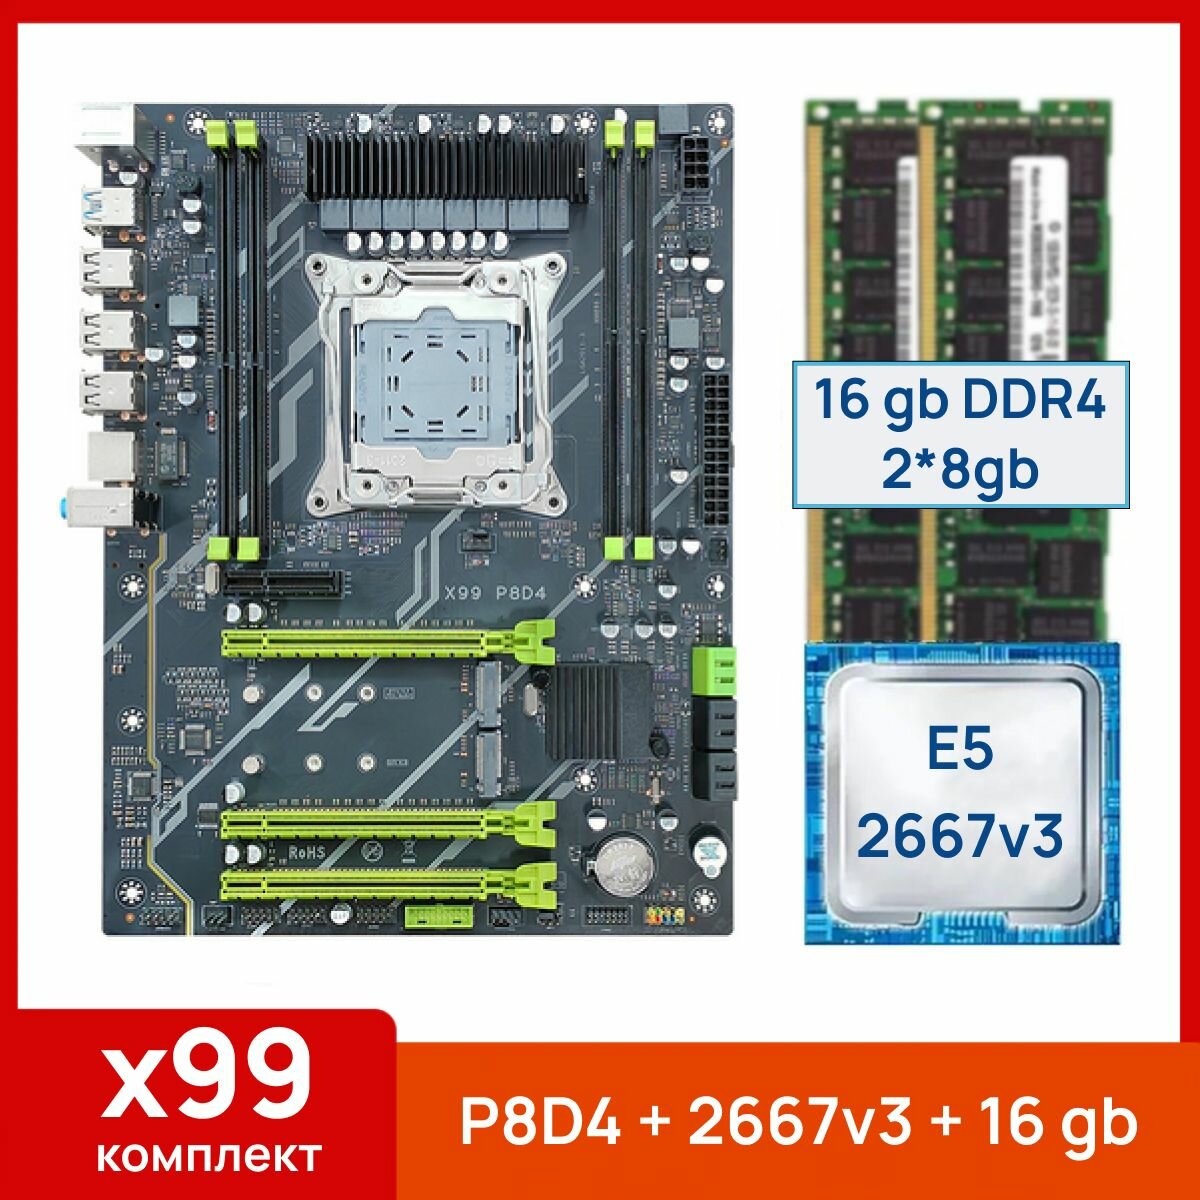 Комплект: Atermiter X99 P8D4 + Xeon E5 2667v3 + 16 gb (2x8gb) DDR4 ecc reg